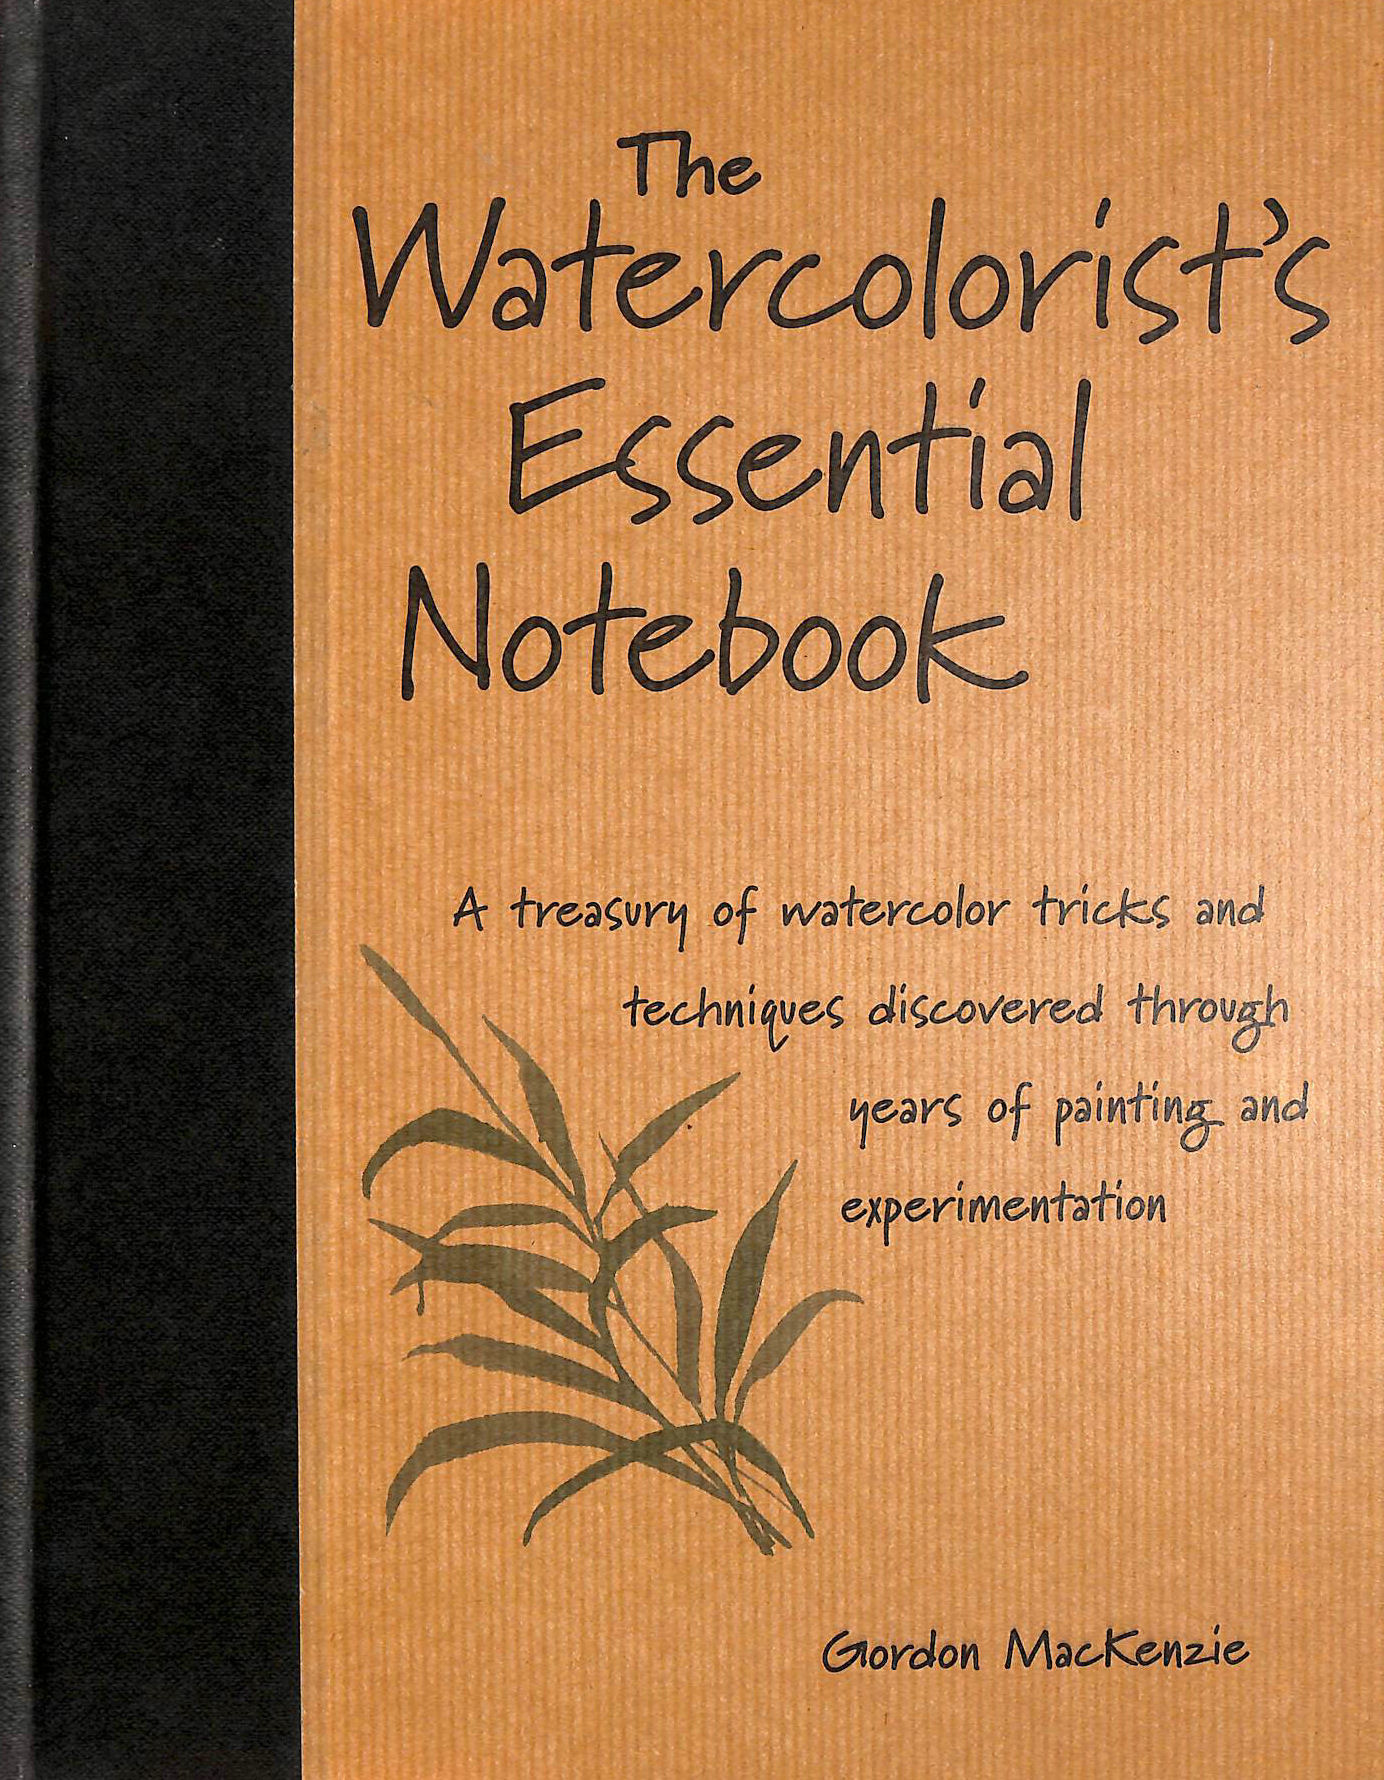 GORDON MACKENZIE - The Watercolorist's Essential Notebook